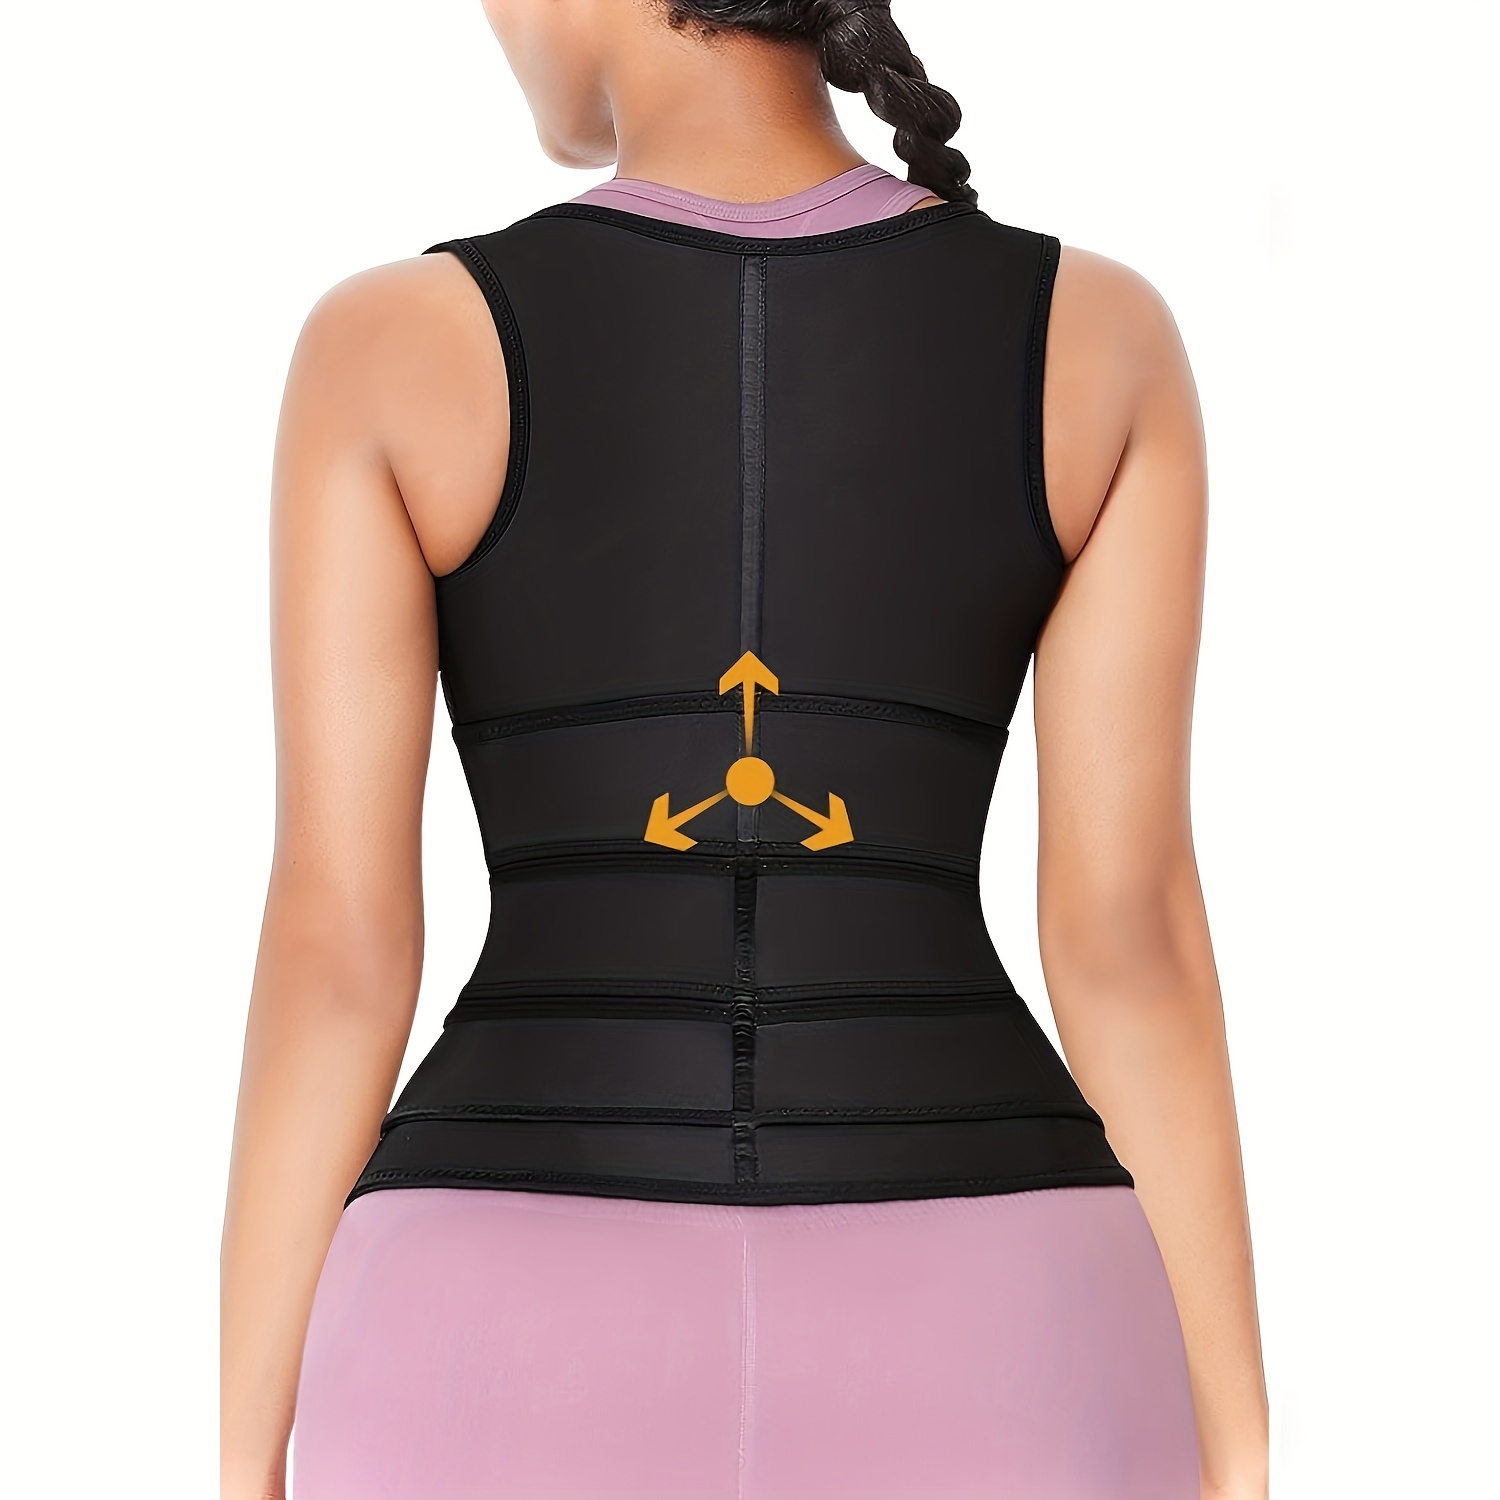 FUTATA Women Waist Trainer Slim Corset Zipper Vest for Weight Loss Gym  Workout Waist Cincher Tummy Control Body Shaper Tank Top With Straps